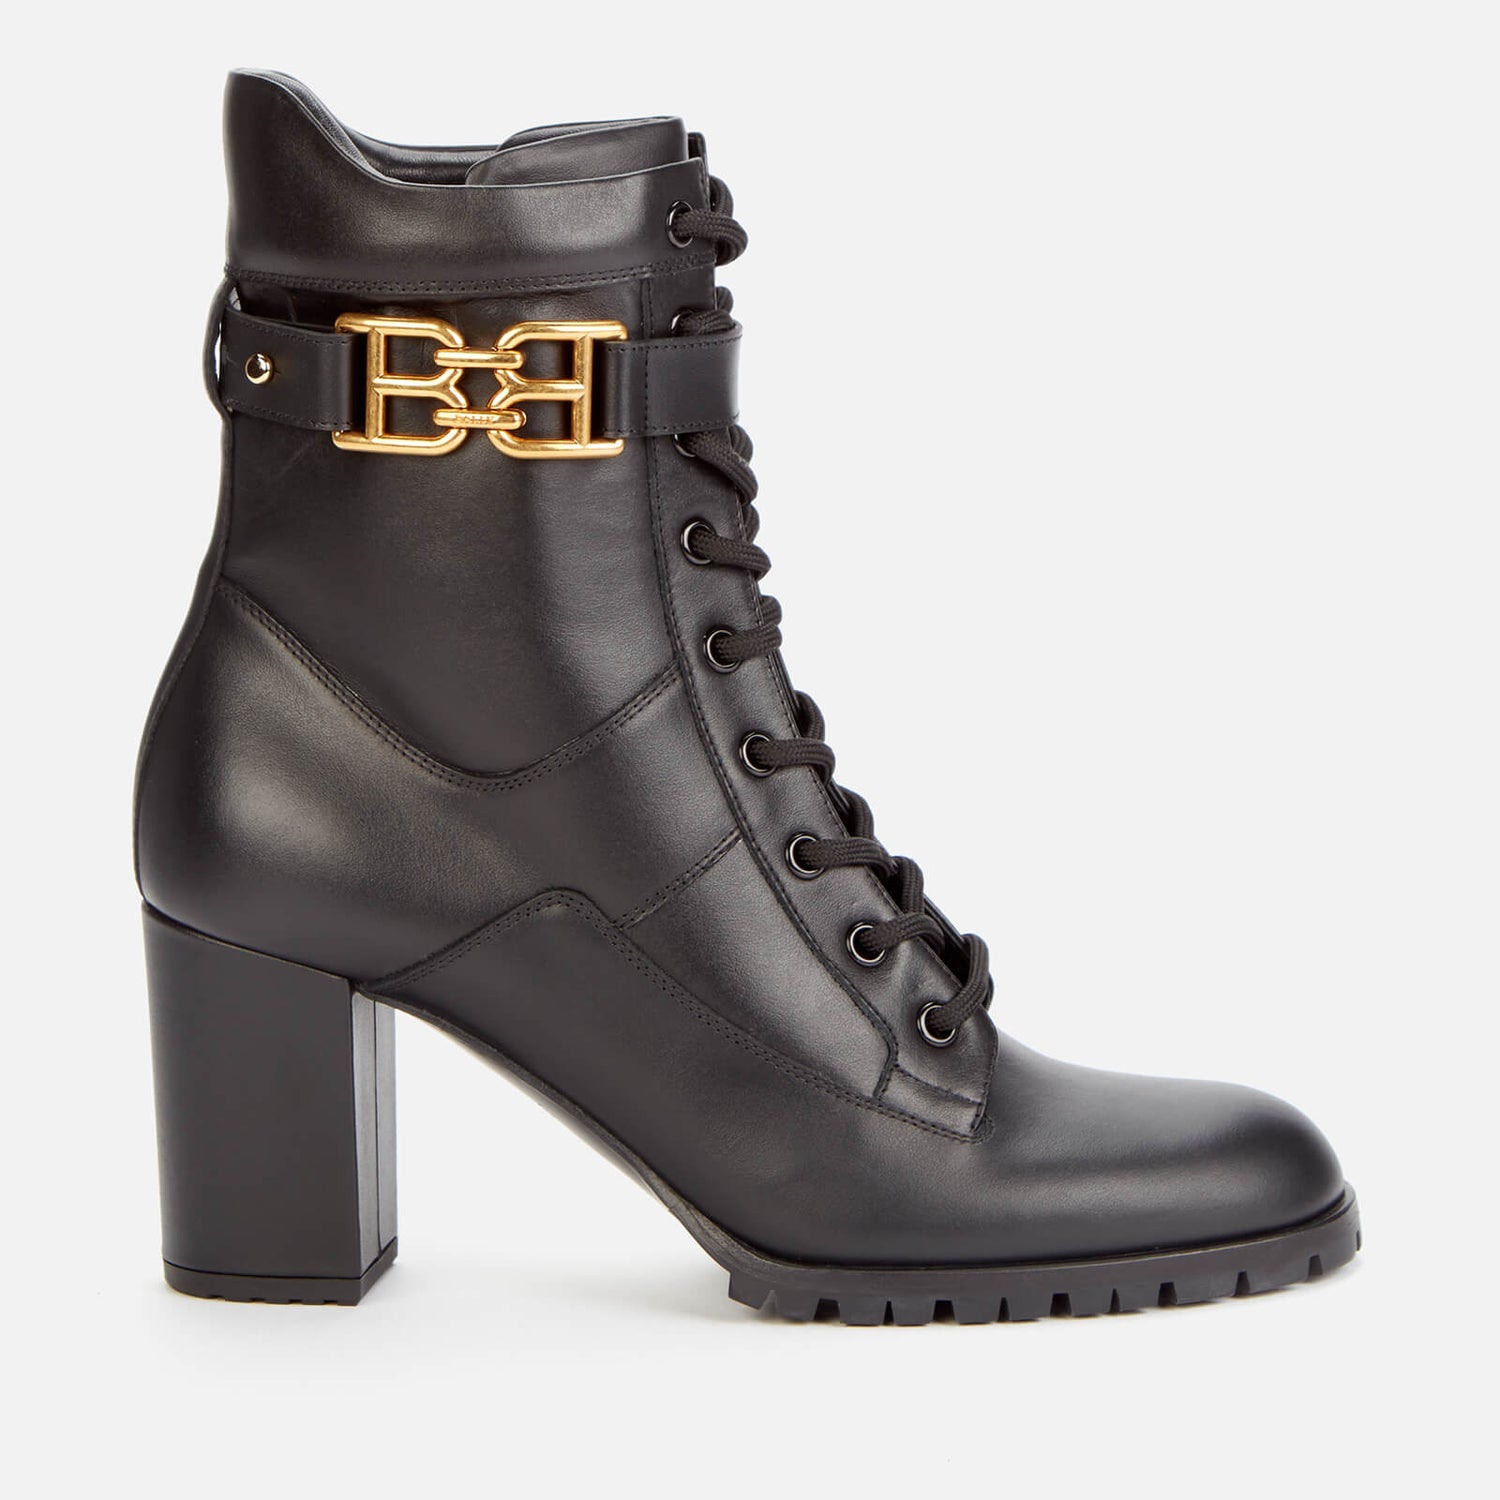 Bally Women's Gioele Leather Lace Up Boots - Black - UK 6